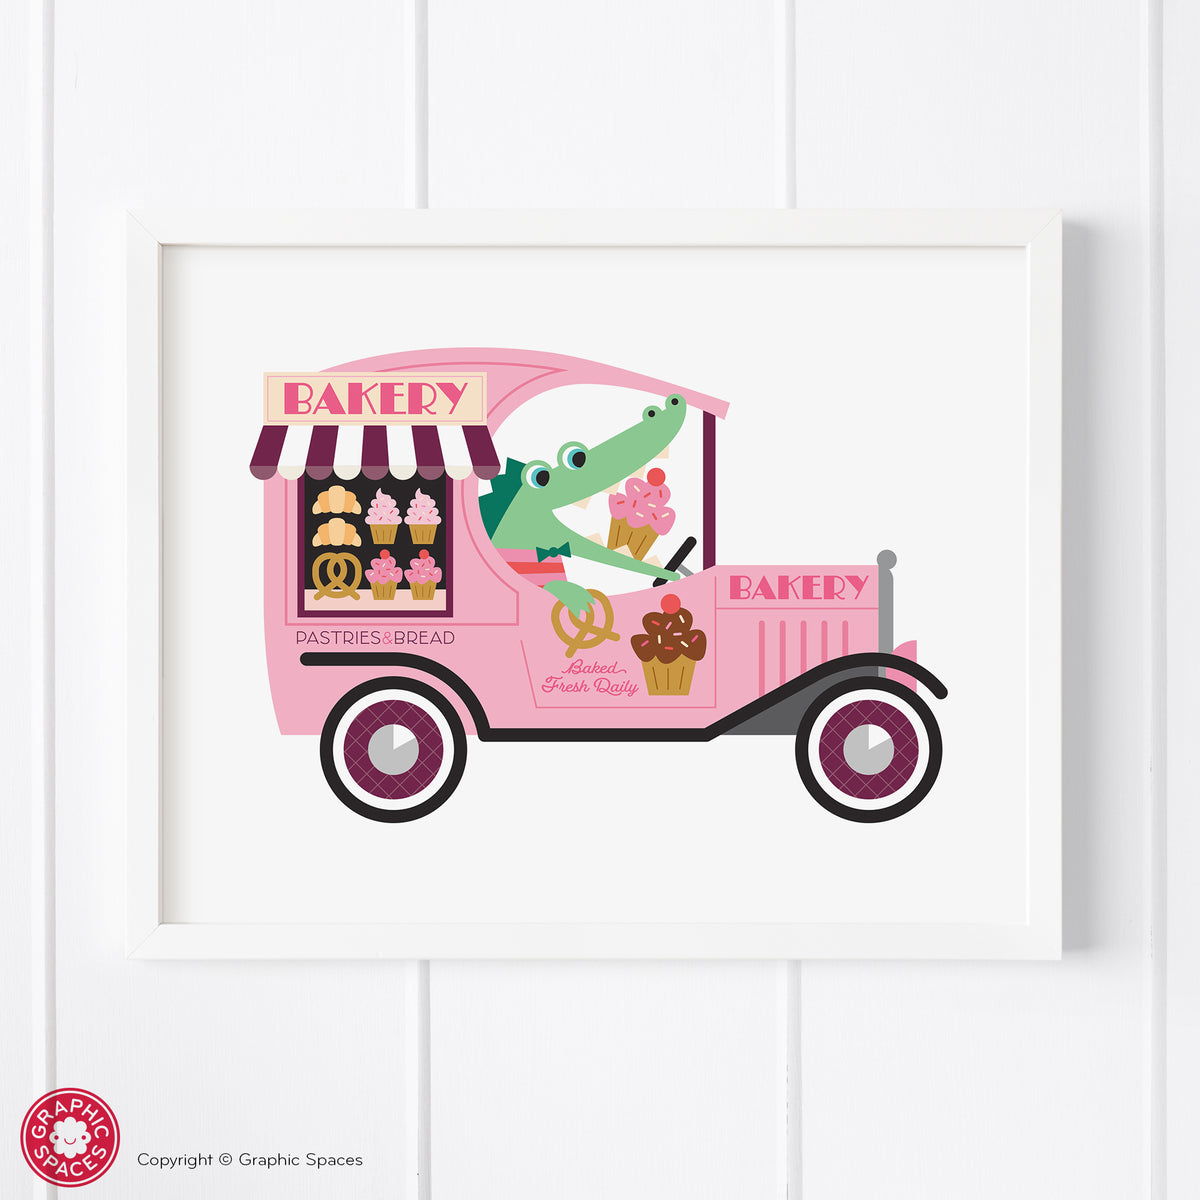 Food Truck Art Prints - Set of 3